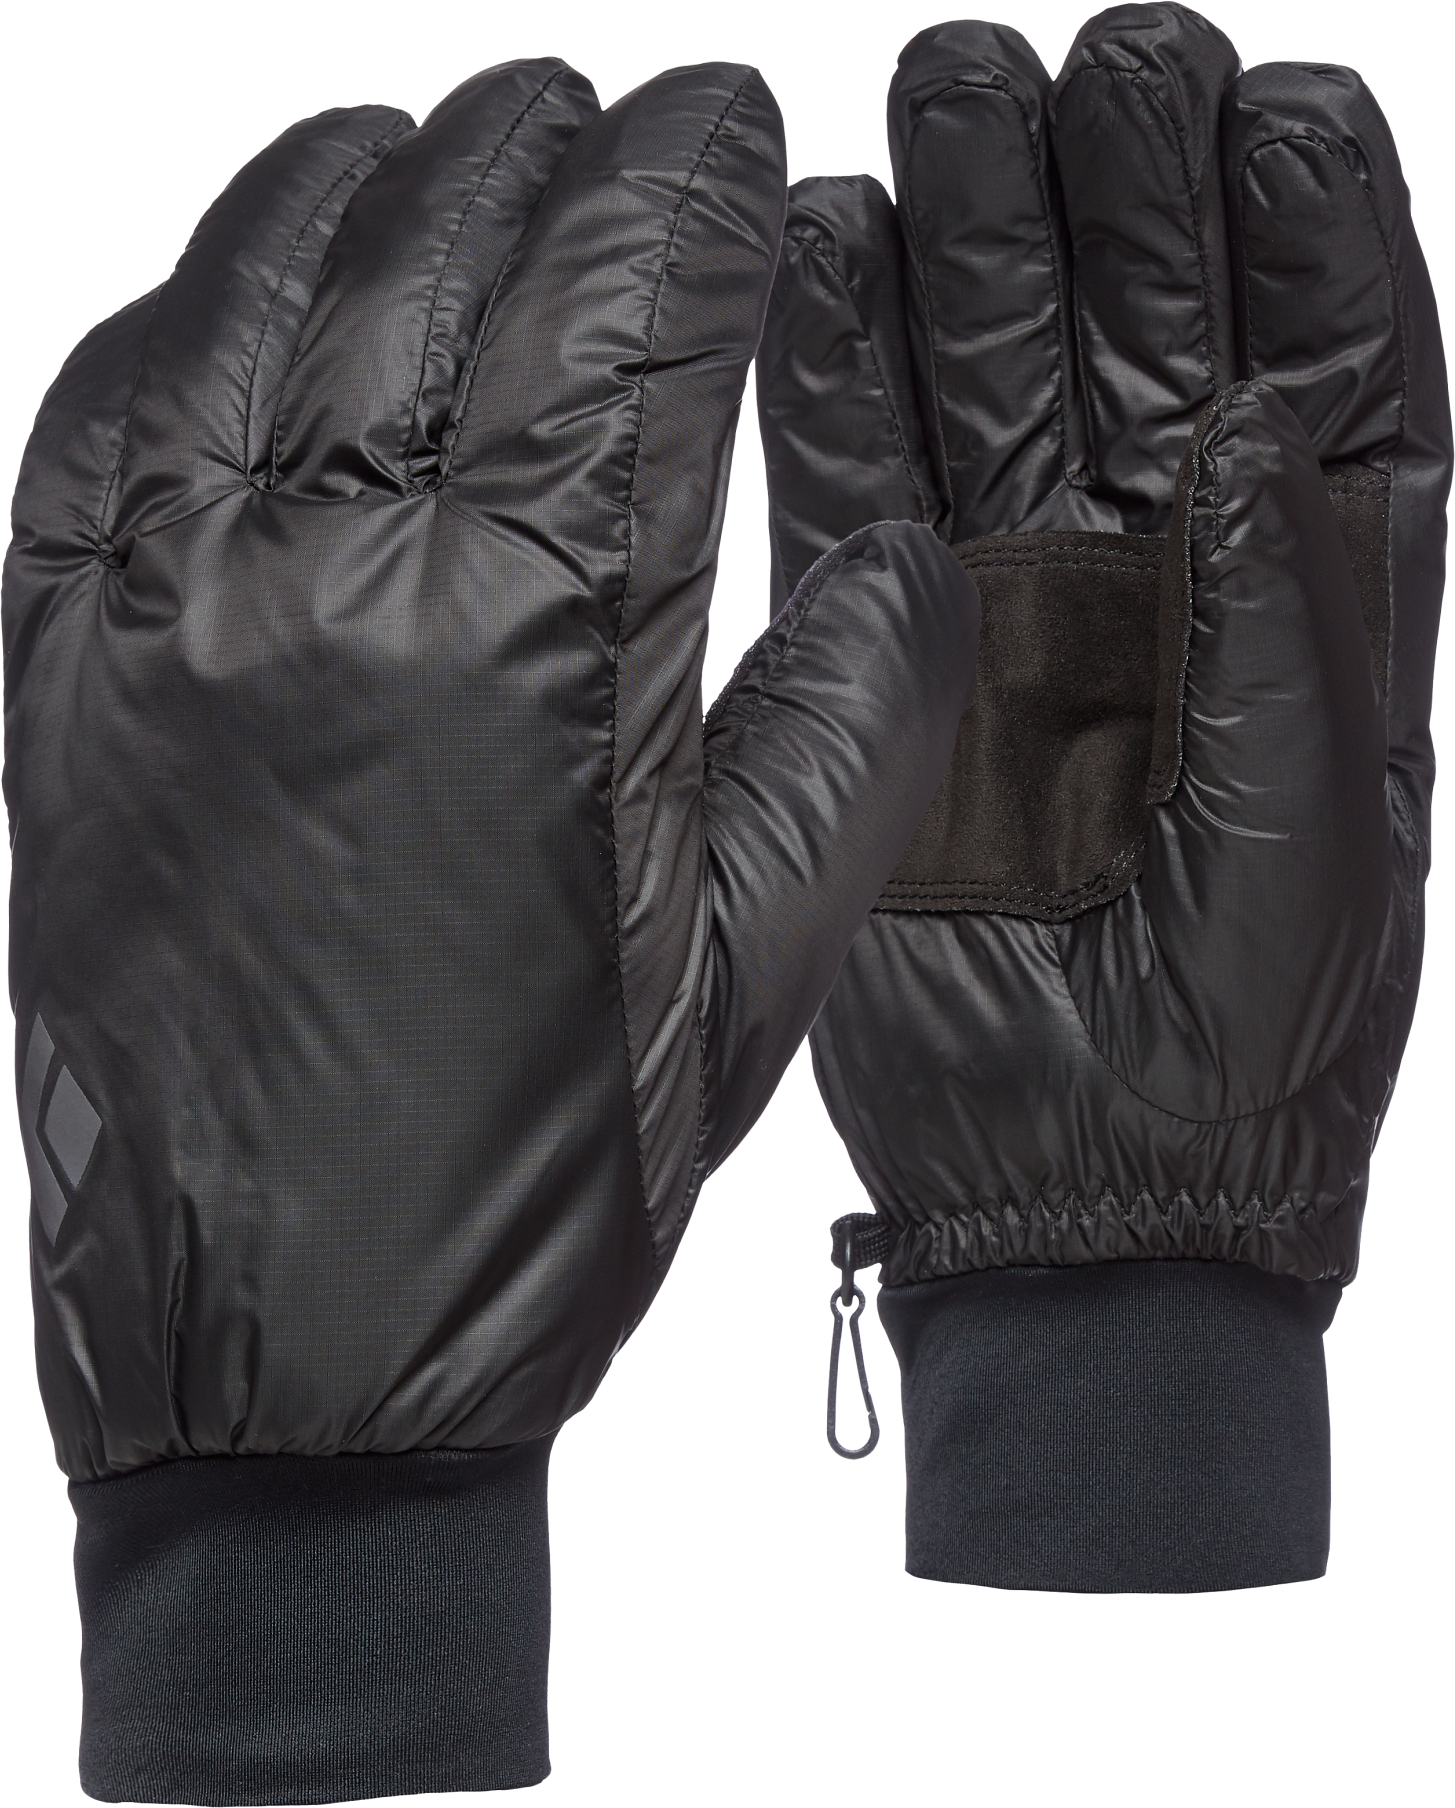 Stance Gloves Black